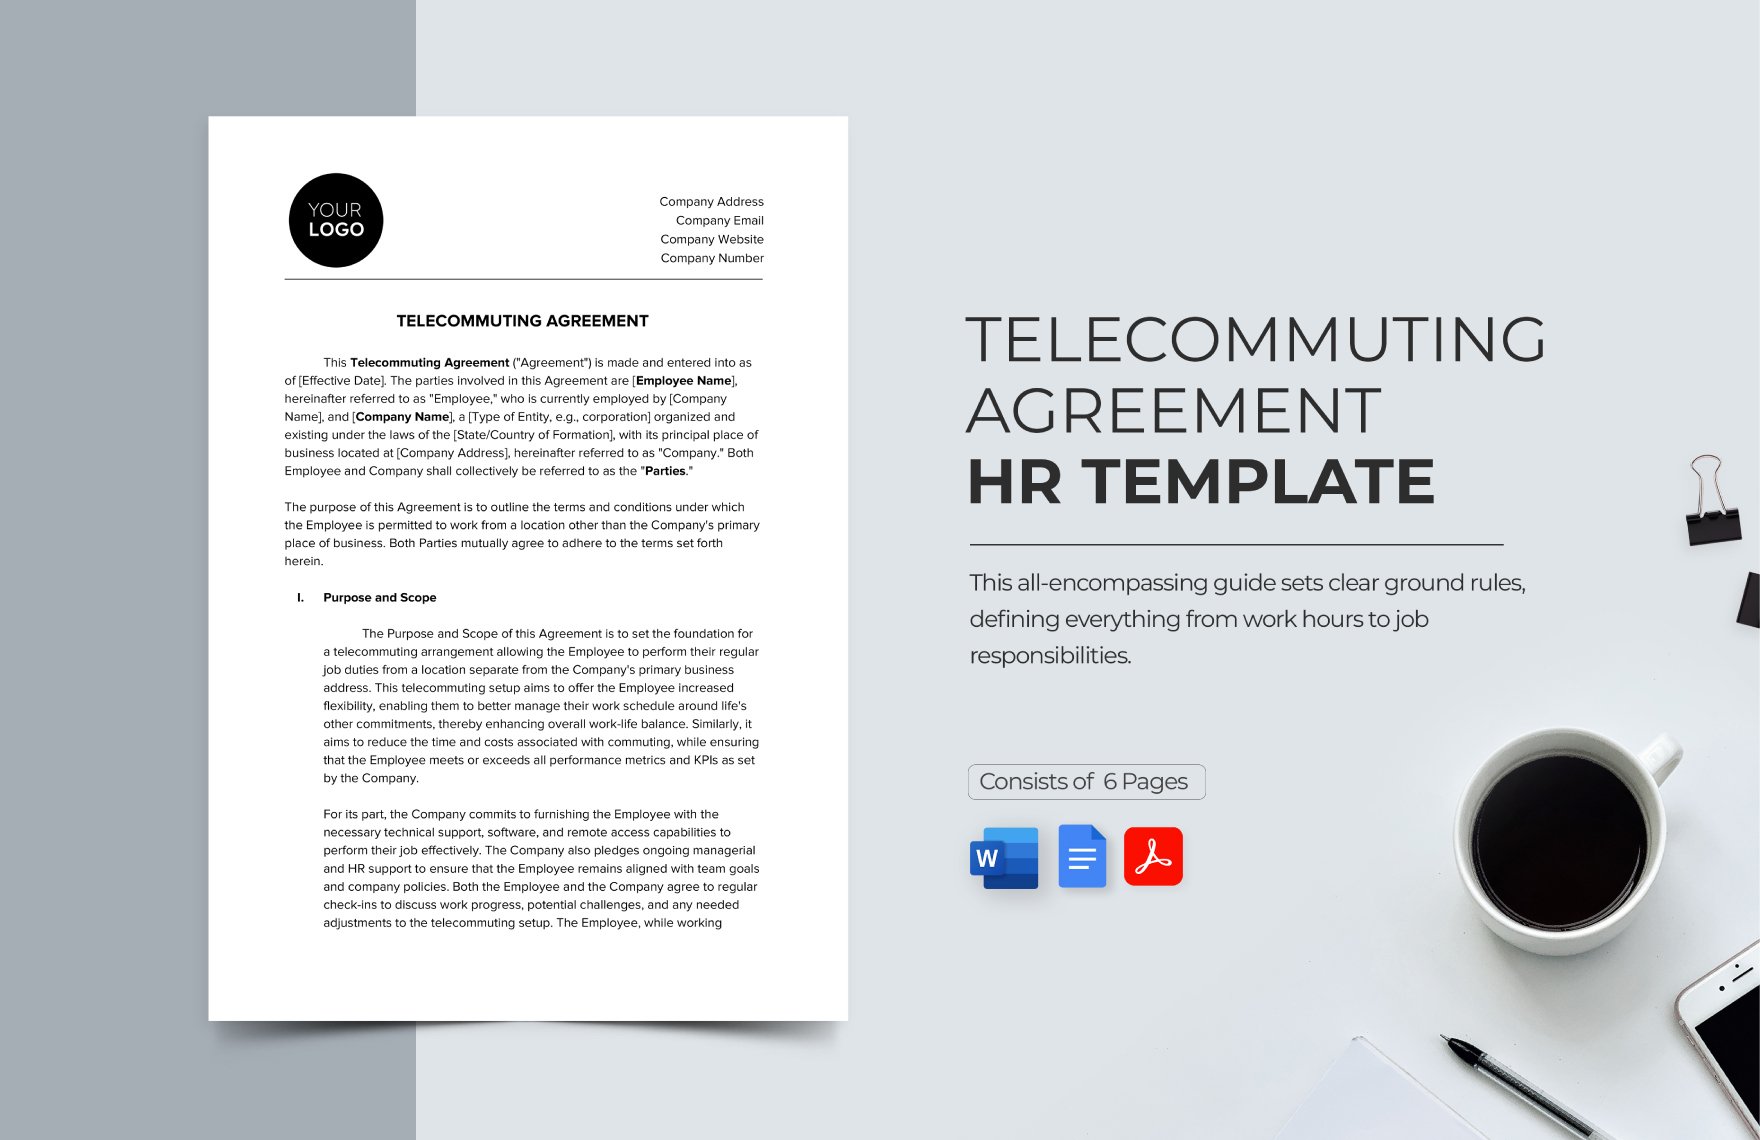 Telecommuting Agreement HR Template